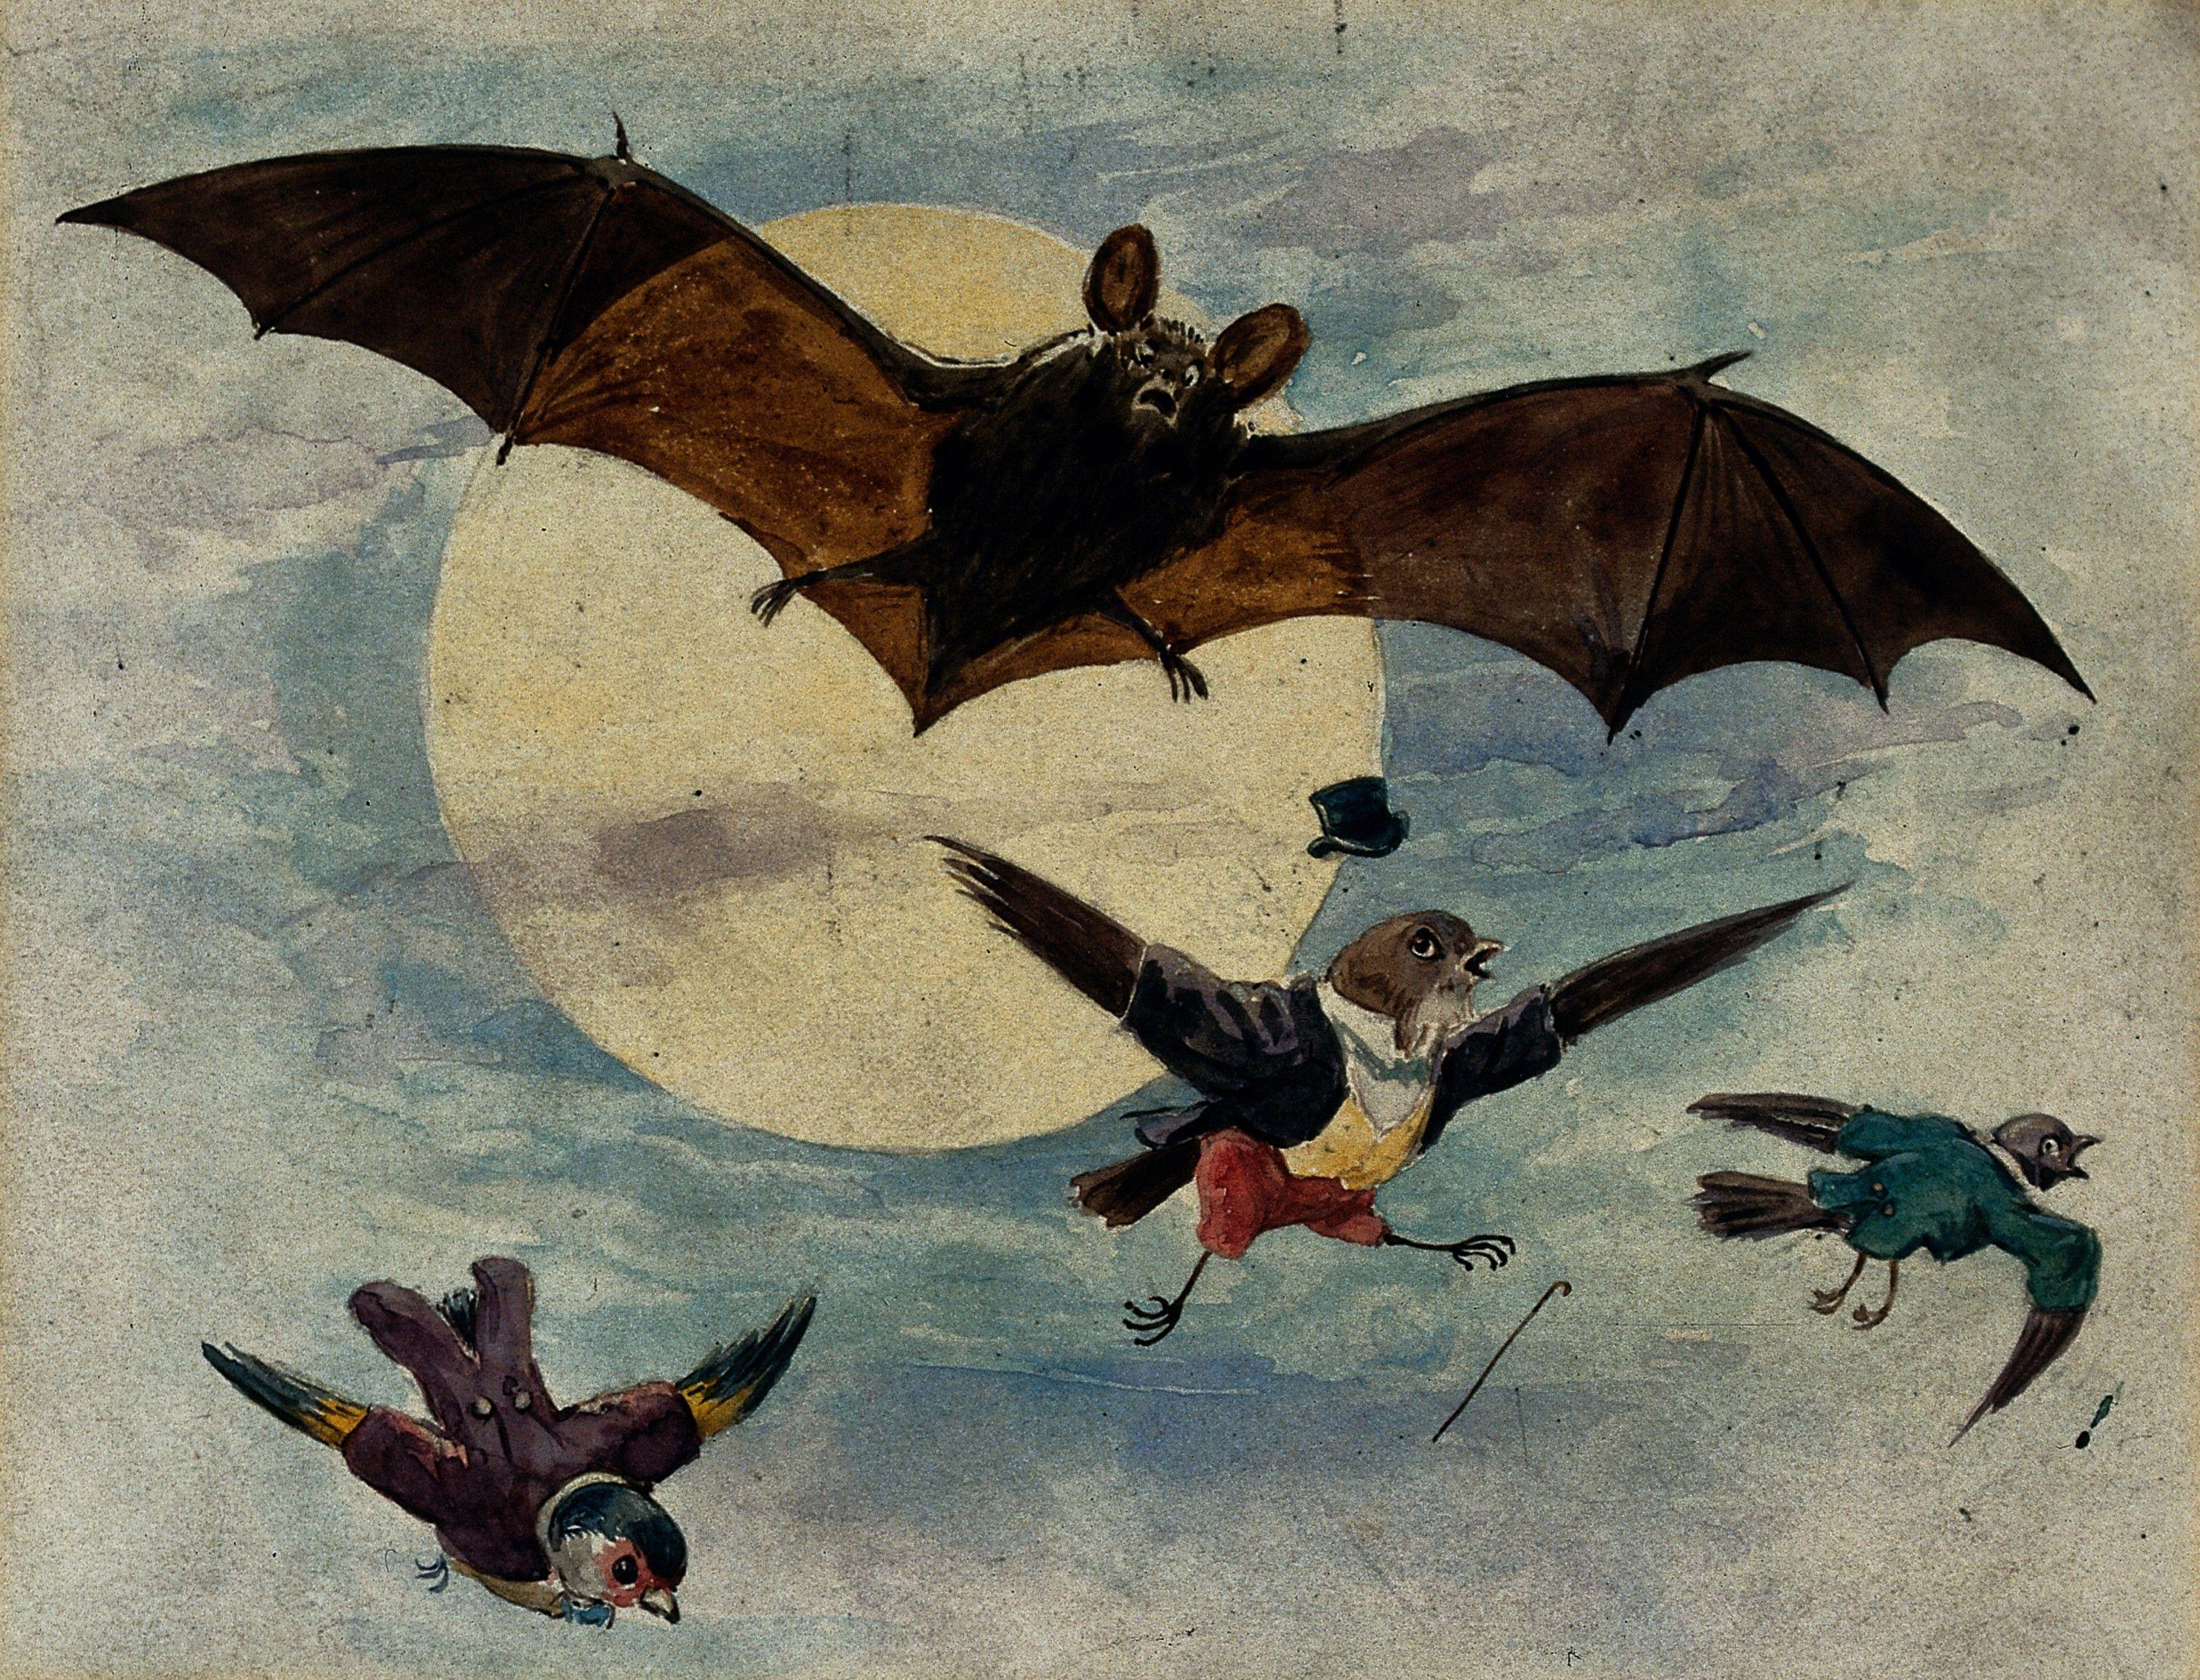 The Birds On Bat Logo - A bat and three fully dressed birds flying